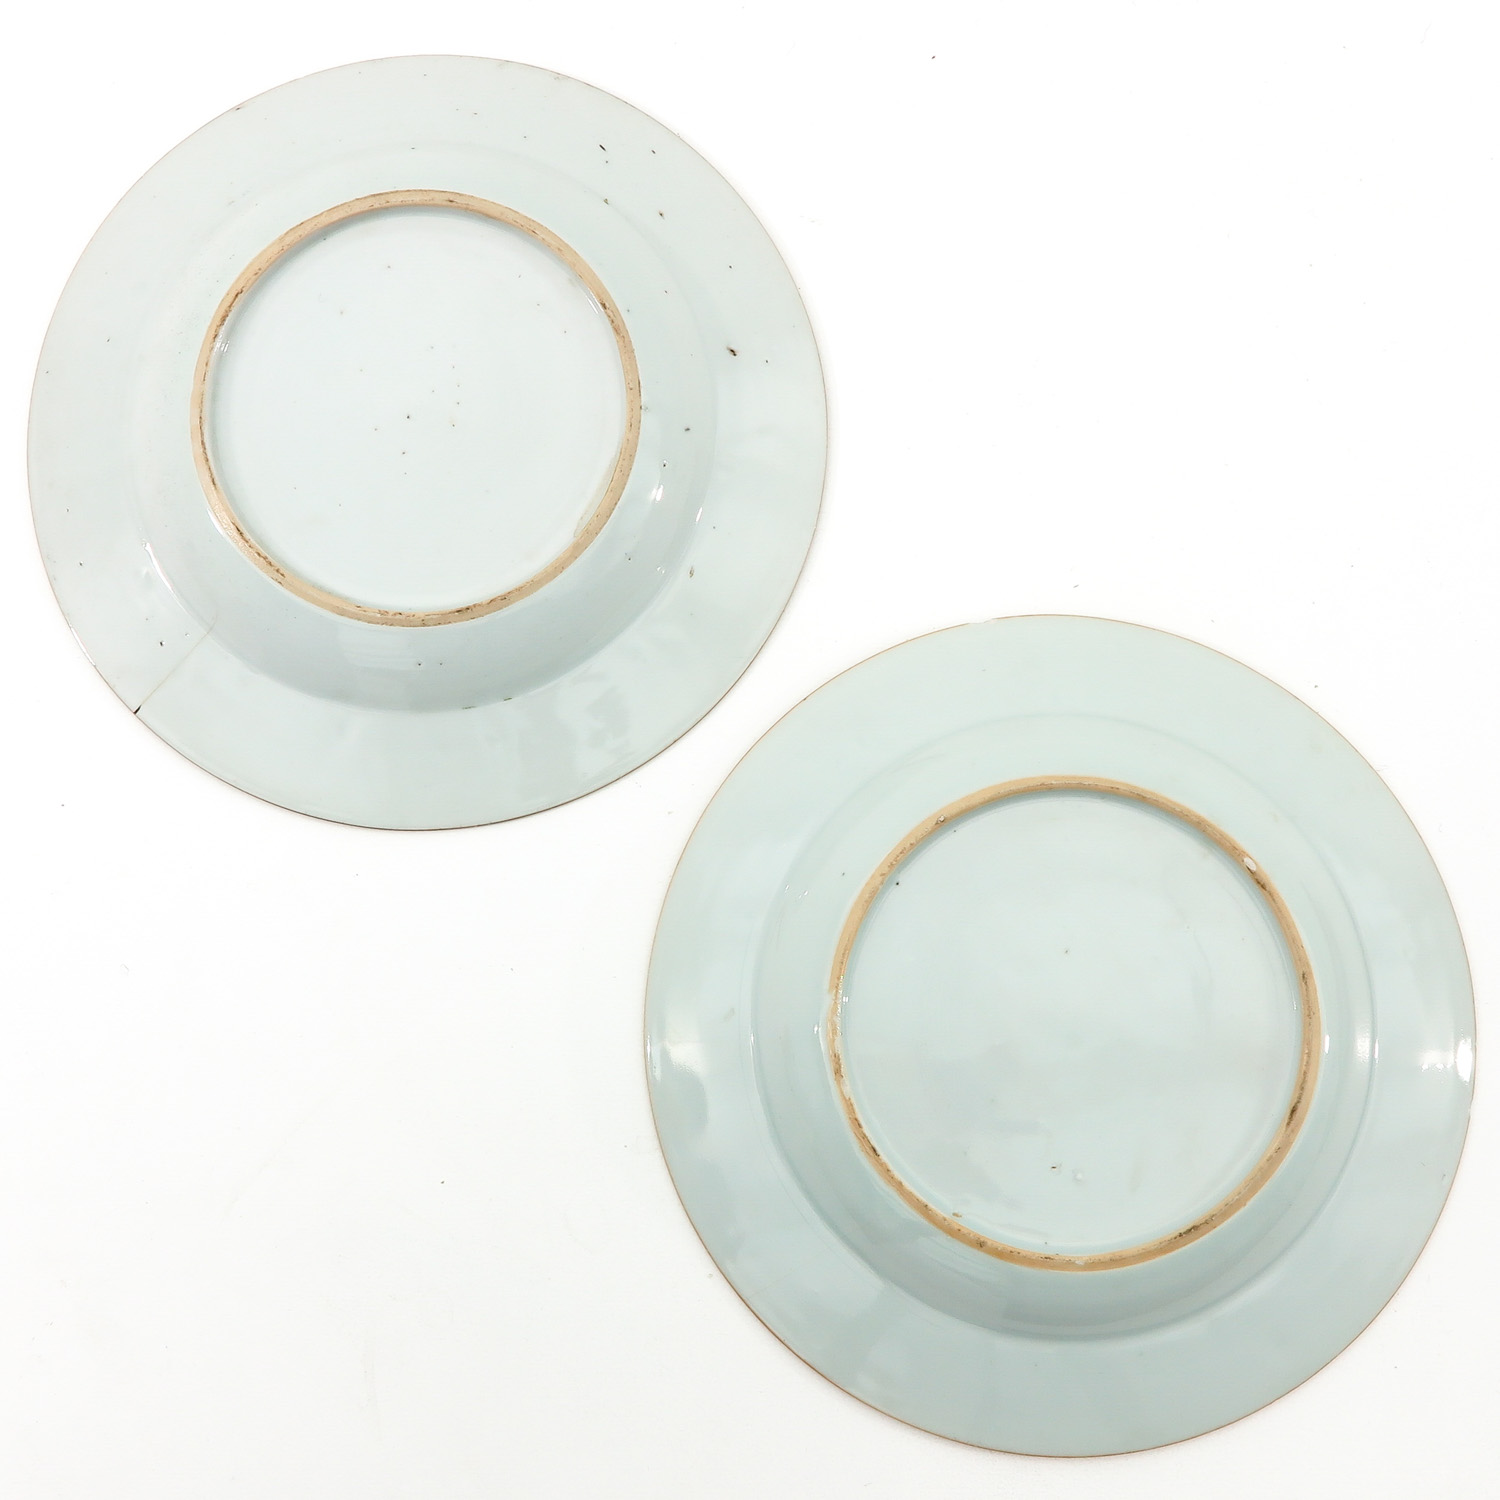 A Series of 5 Imari Plates - Image 6 of 9